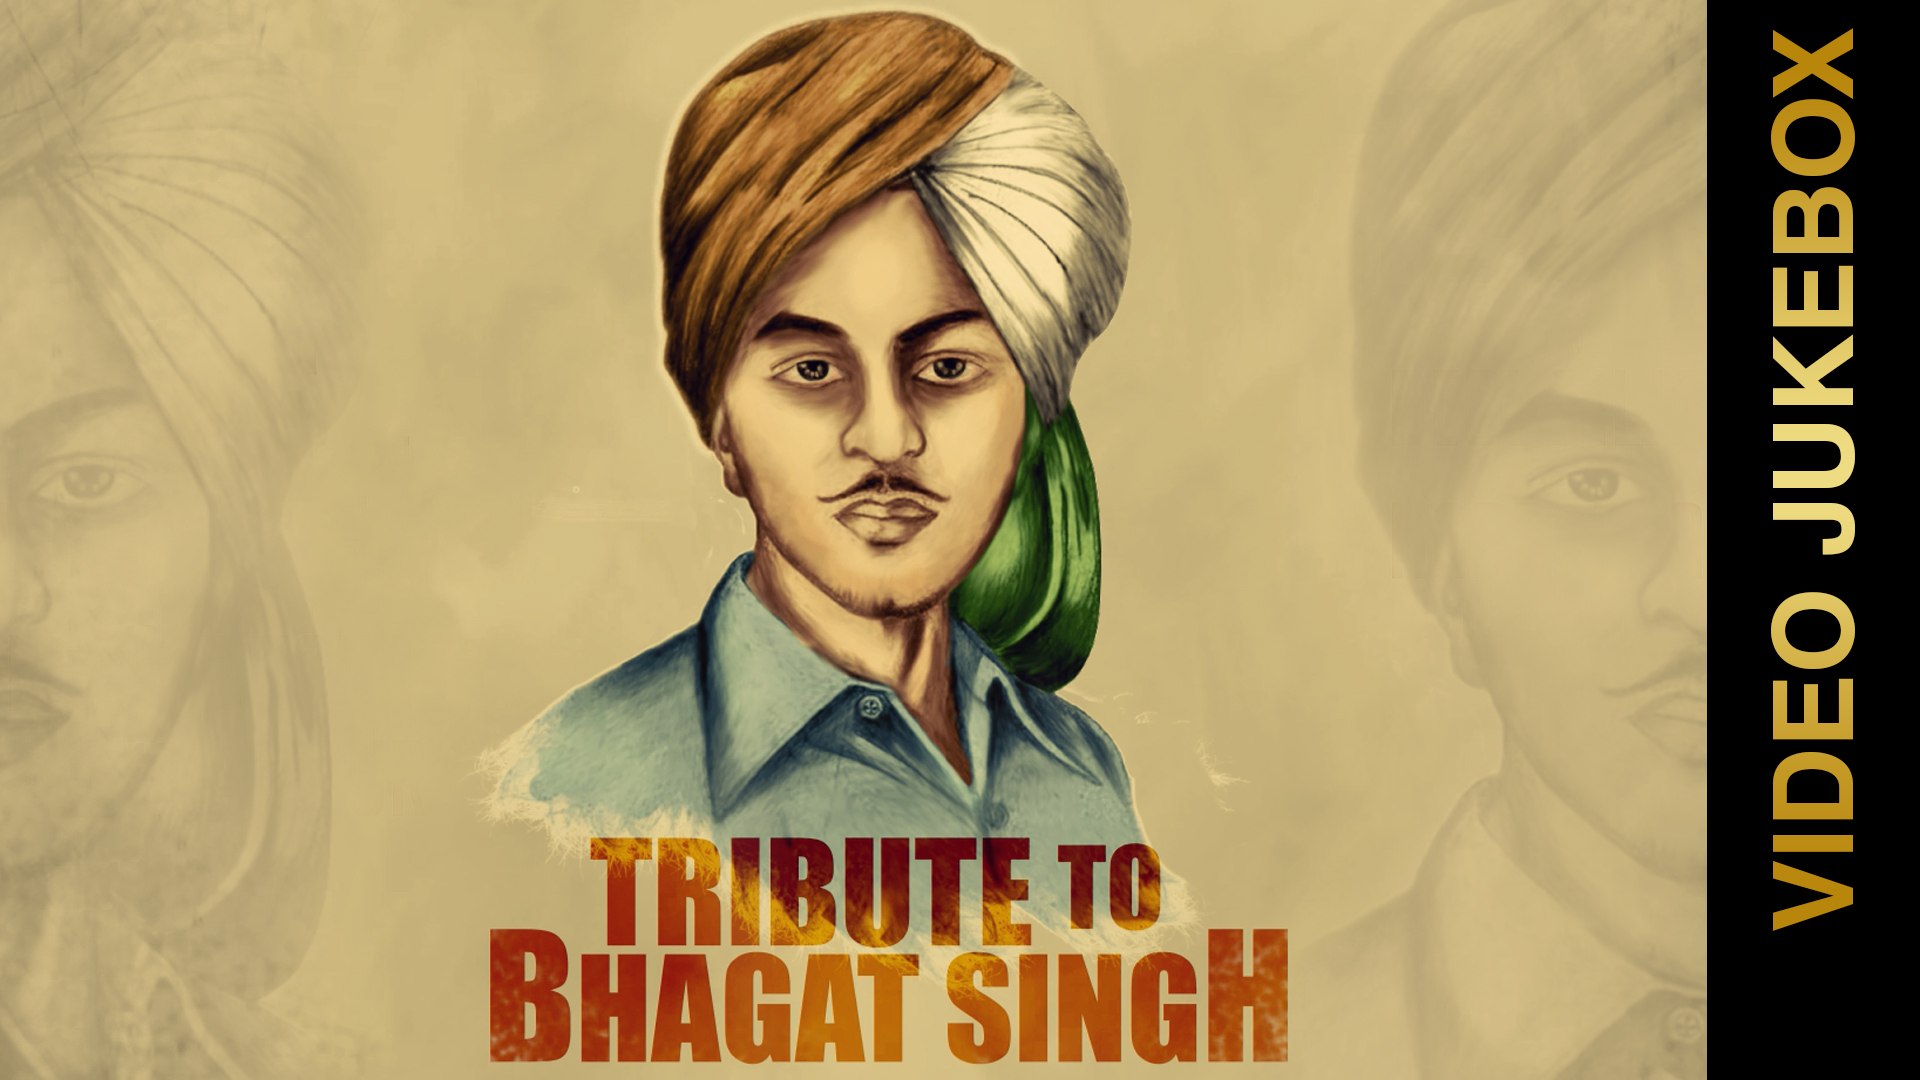 Bhagat Singh - 1920x1080 Wallpaper 